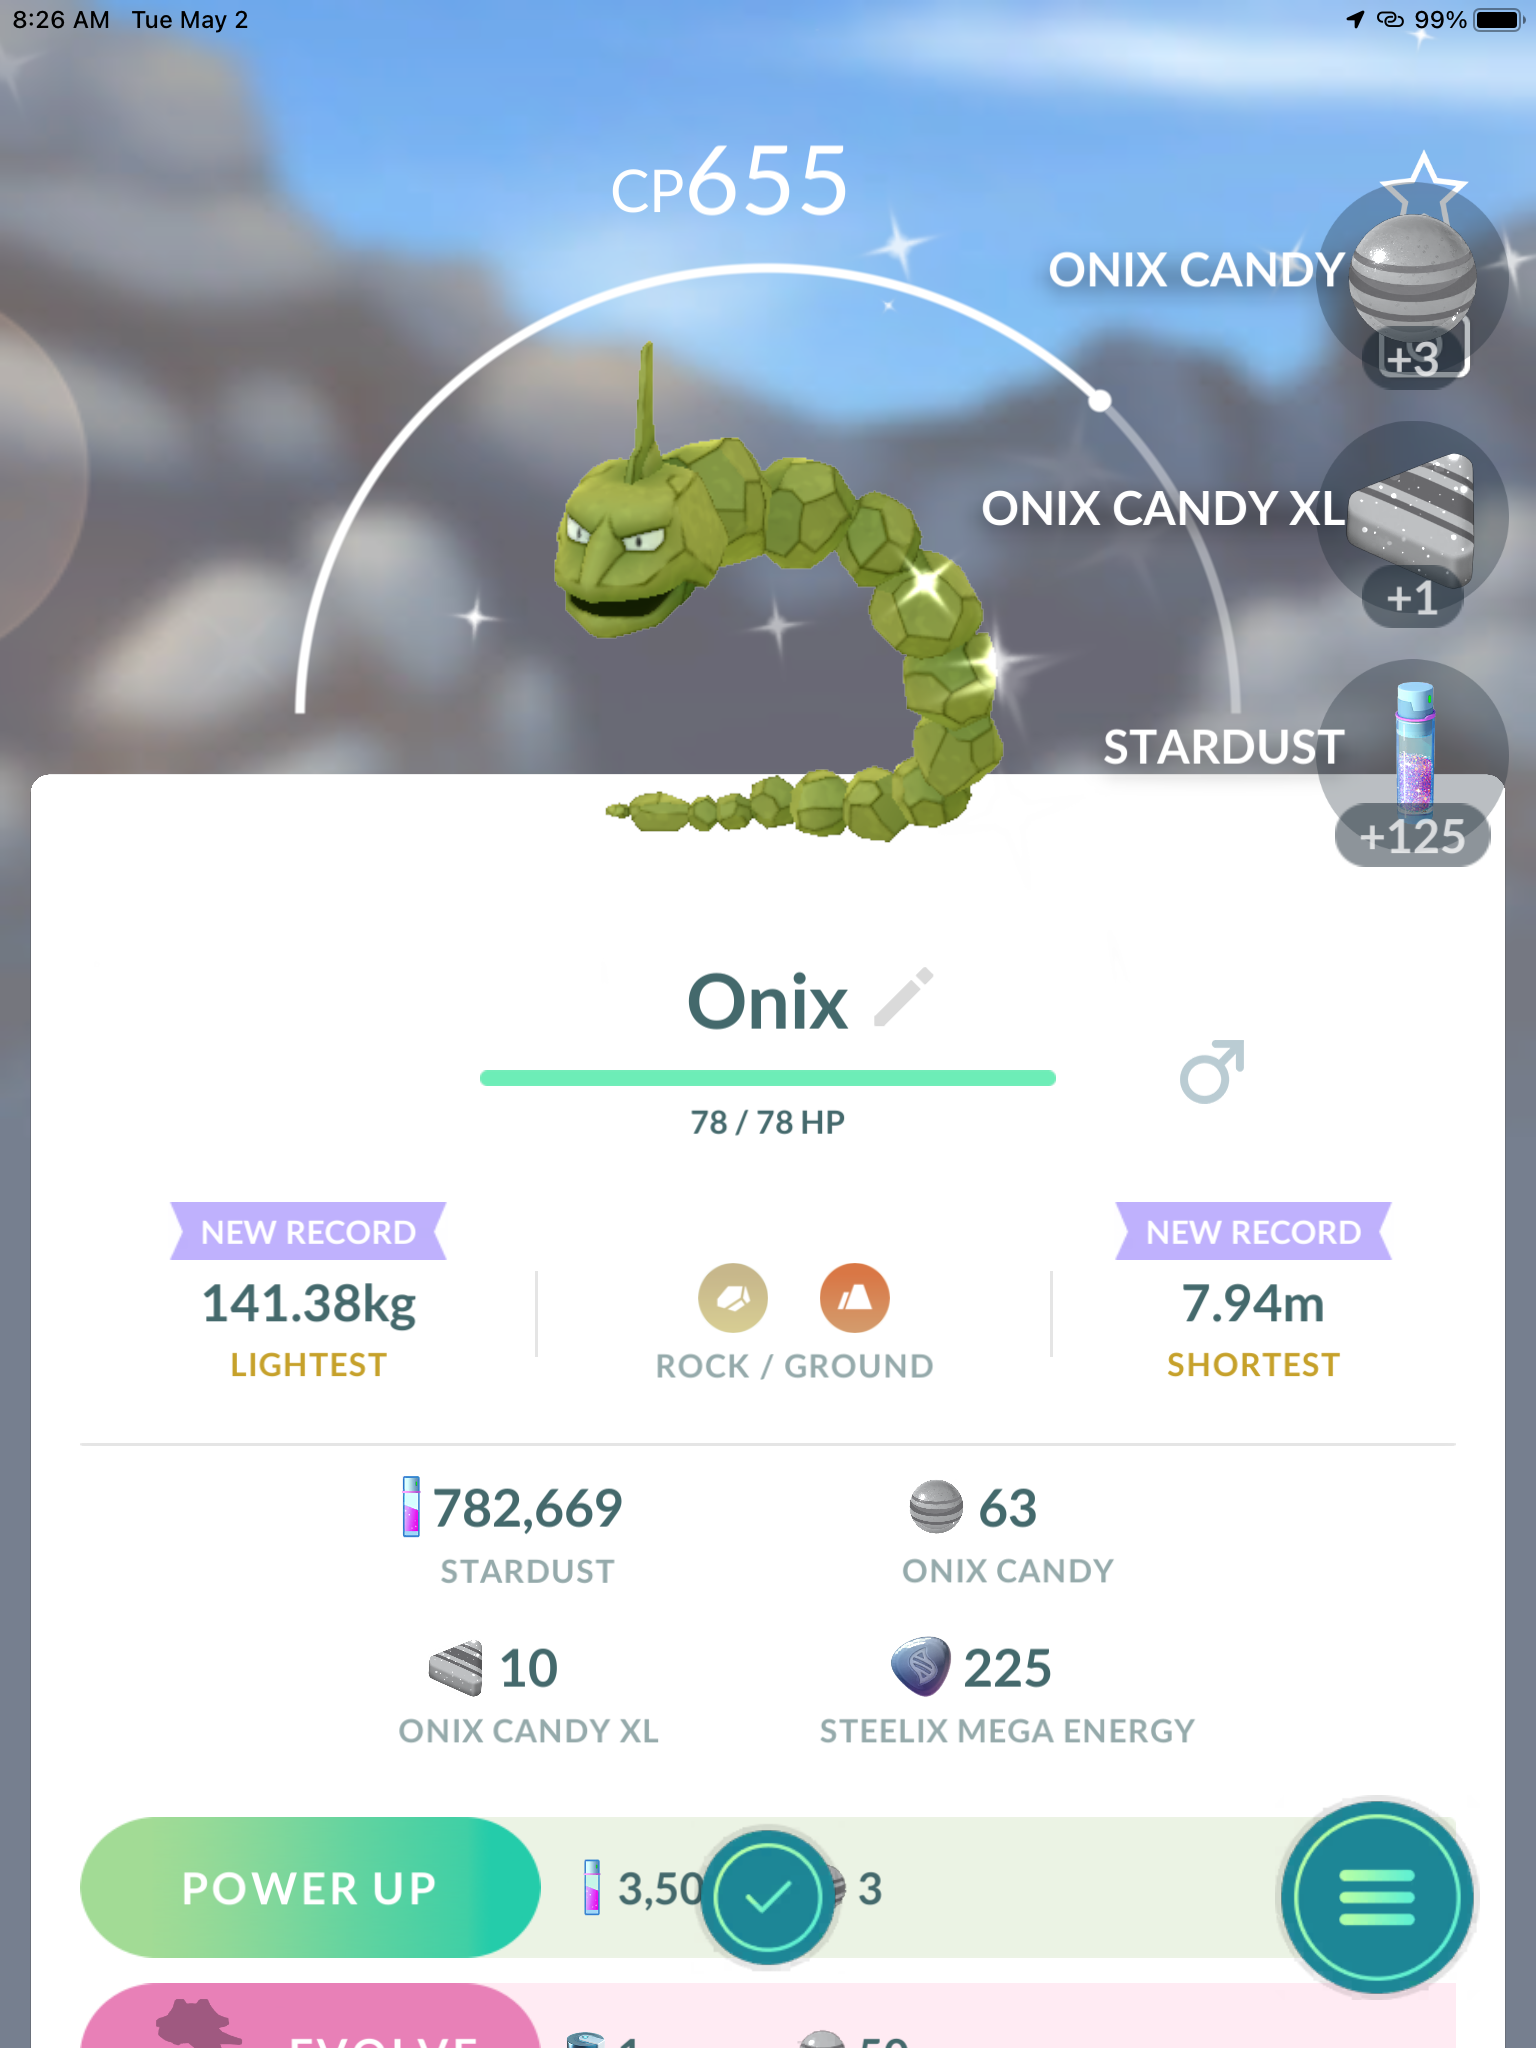 I caught Shiny Onix on Pokemon Go by jonwii on DeviantArt